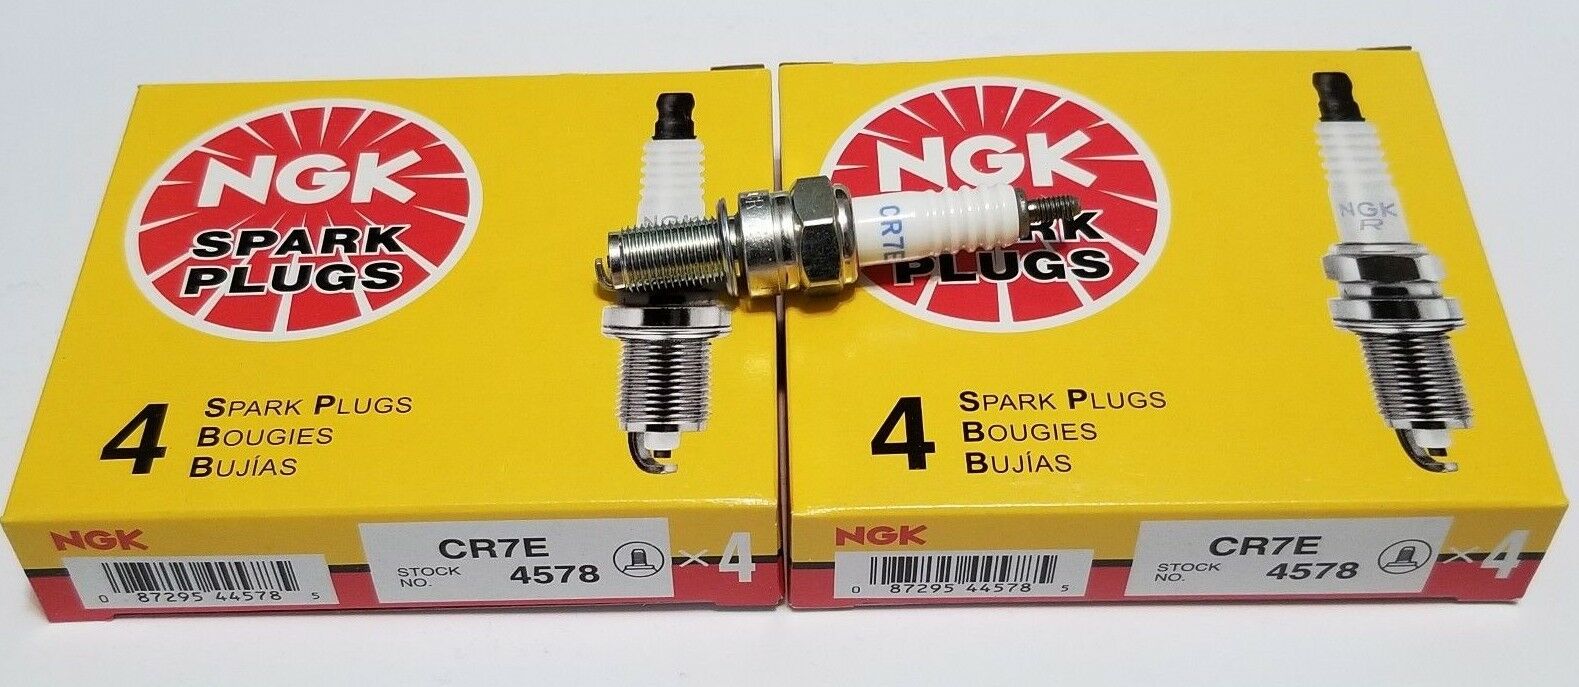 NGK Standard Spark Plugs - Stock #4578 - CR7E - Threaded Stud - Qty (8)